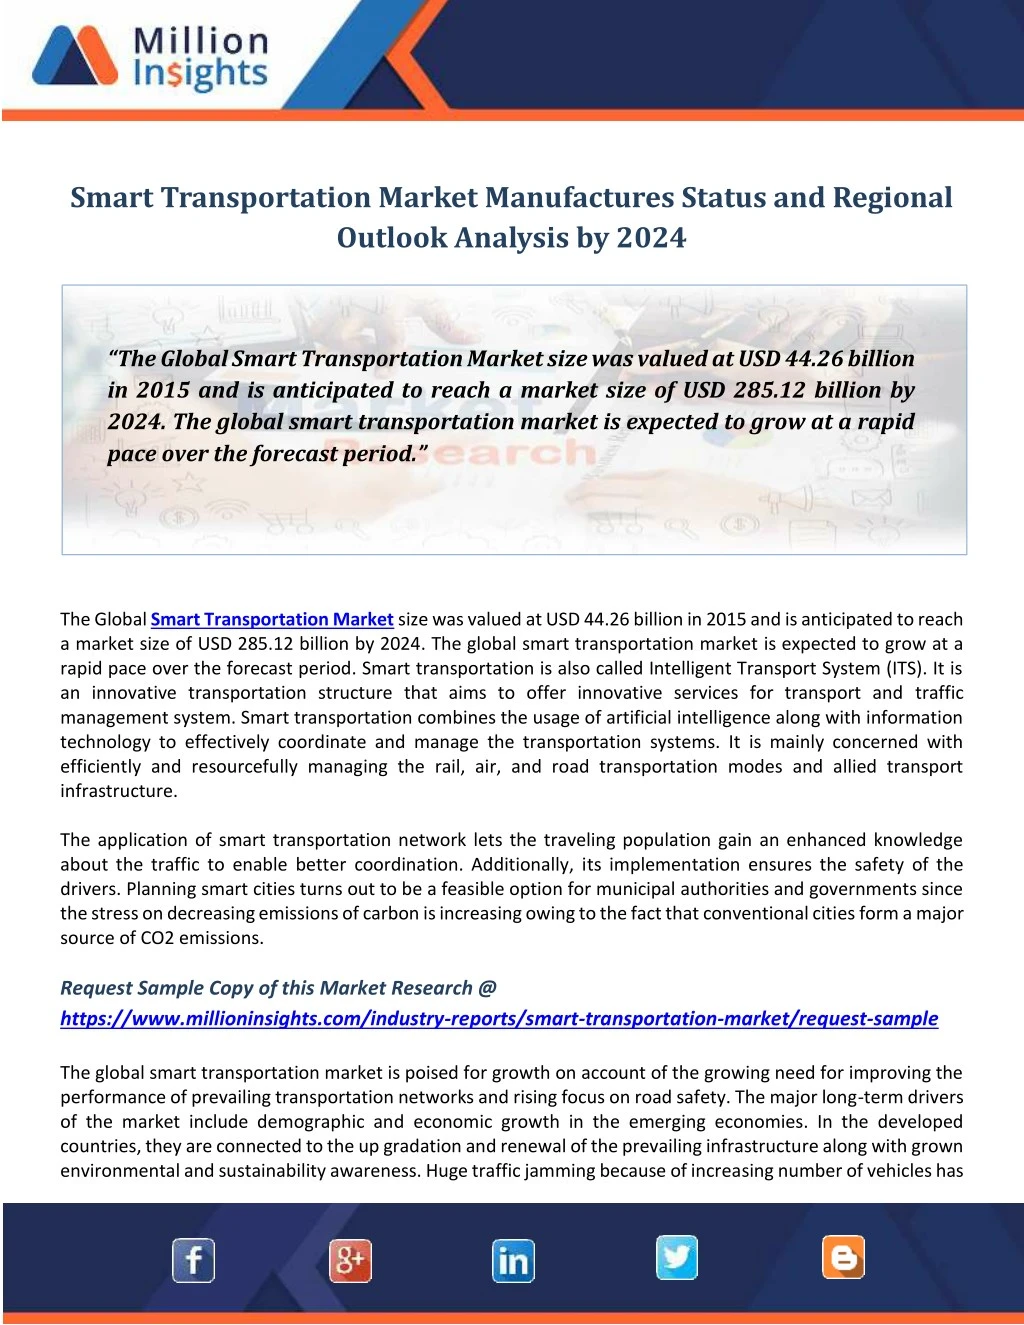 smart transportation market manufactures status